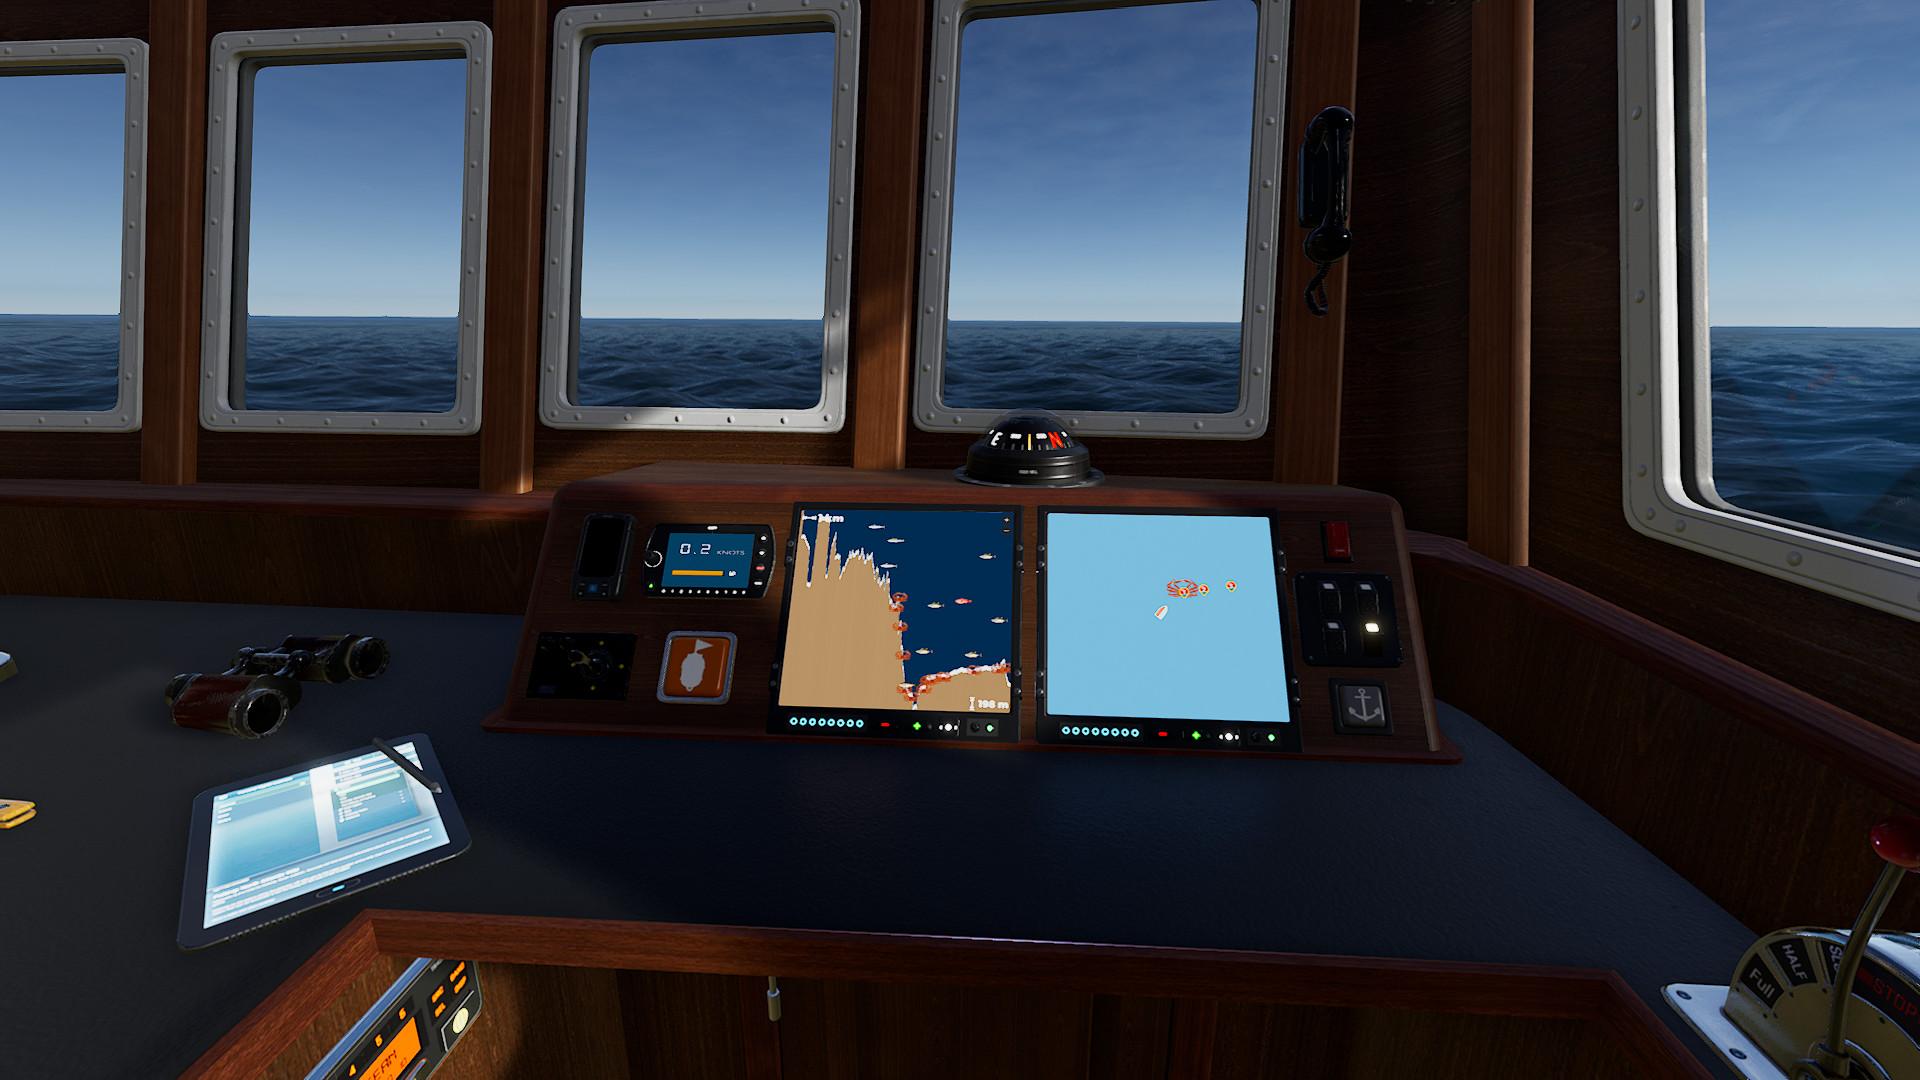 Screenshot №22 from game Fishing: North Atlantic - Enhanced Edition